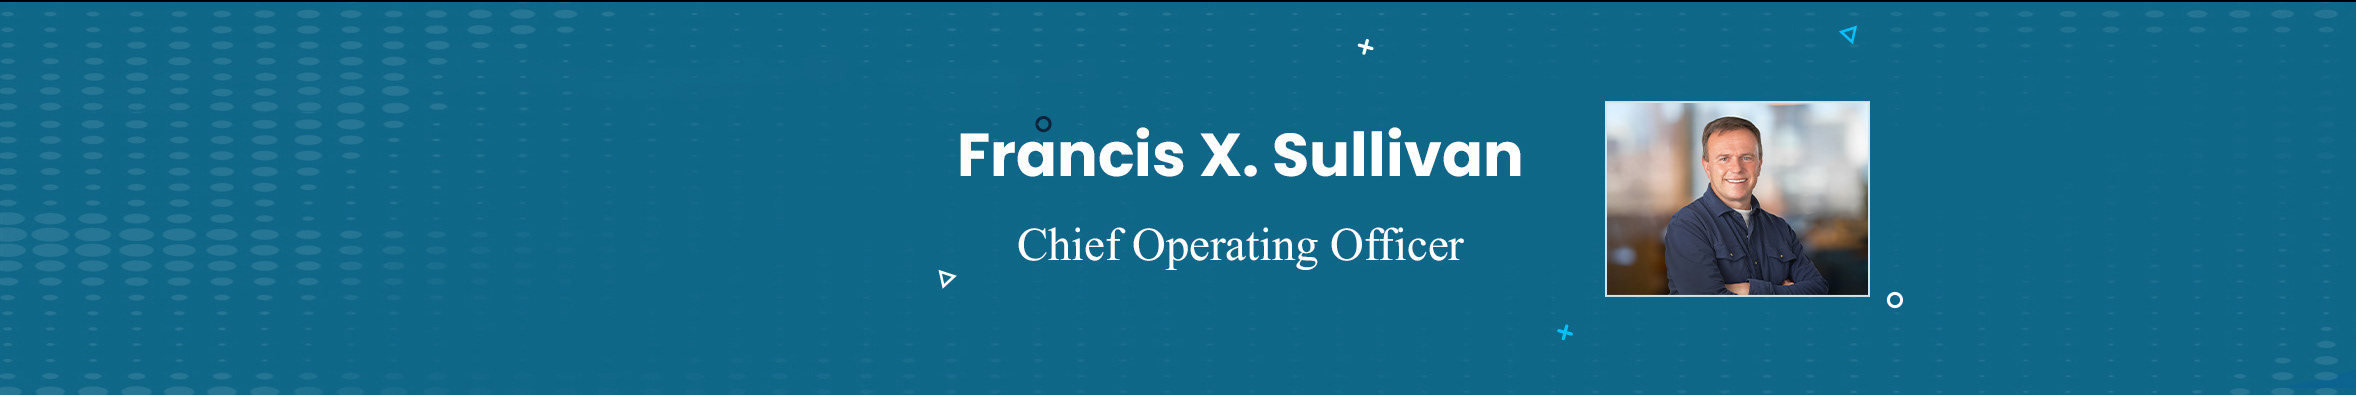 Francis X. Sullivan profil başlığı